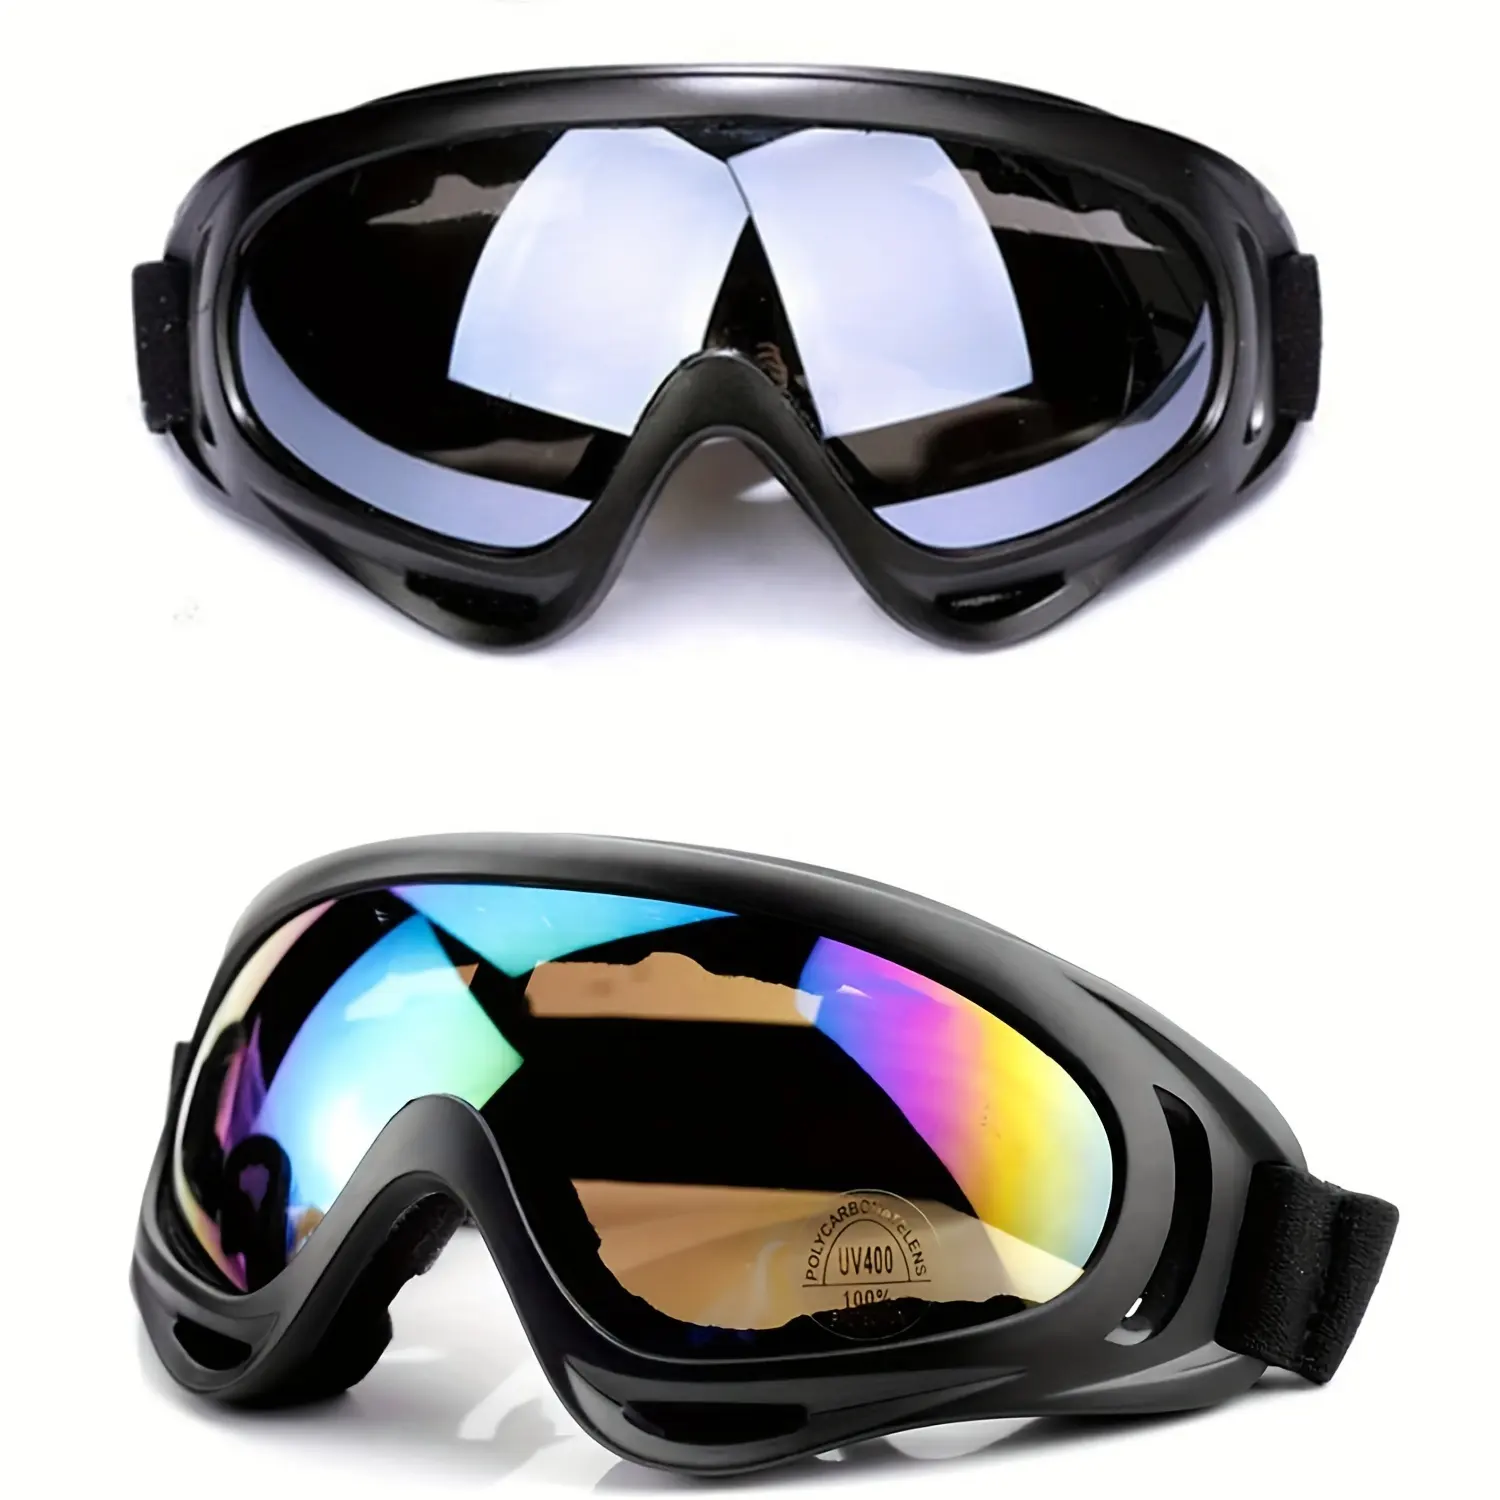 Gafas a prueba de viento para exteriores, equipo táctico para deportes de motocicleta, esquí, nieve, Snowboard, protección UV, gafas antiarañazos a prueba de polvo